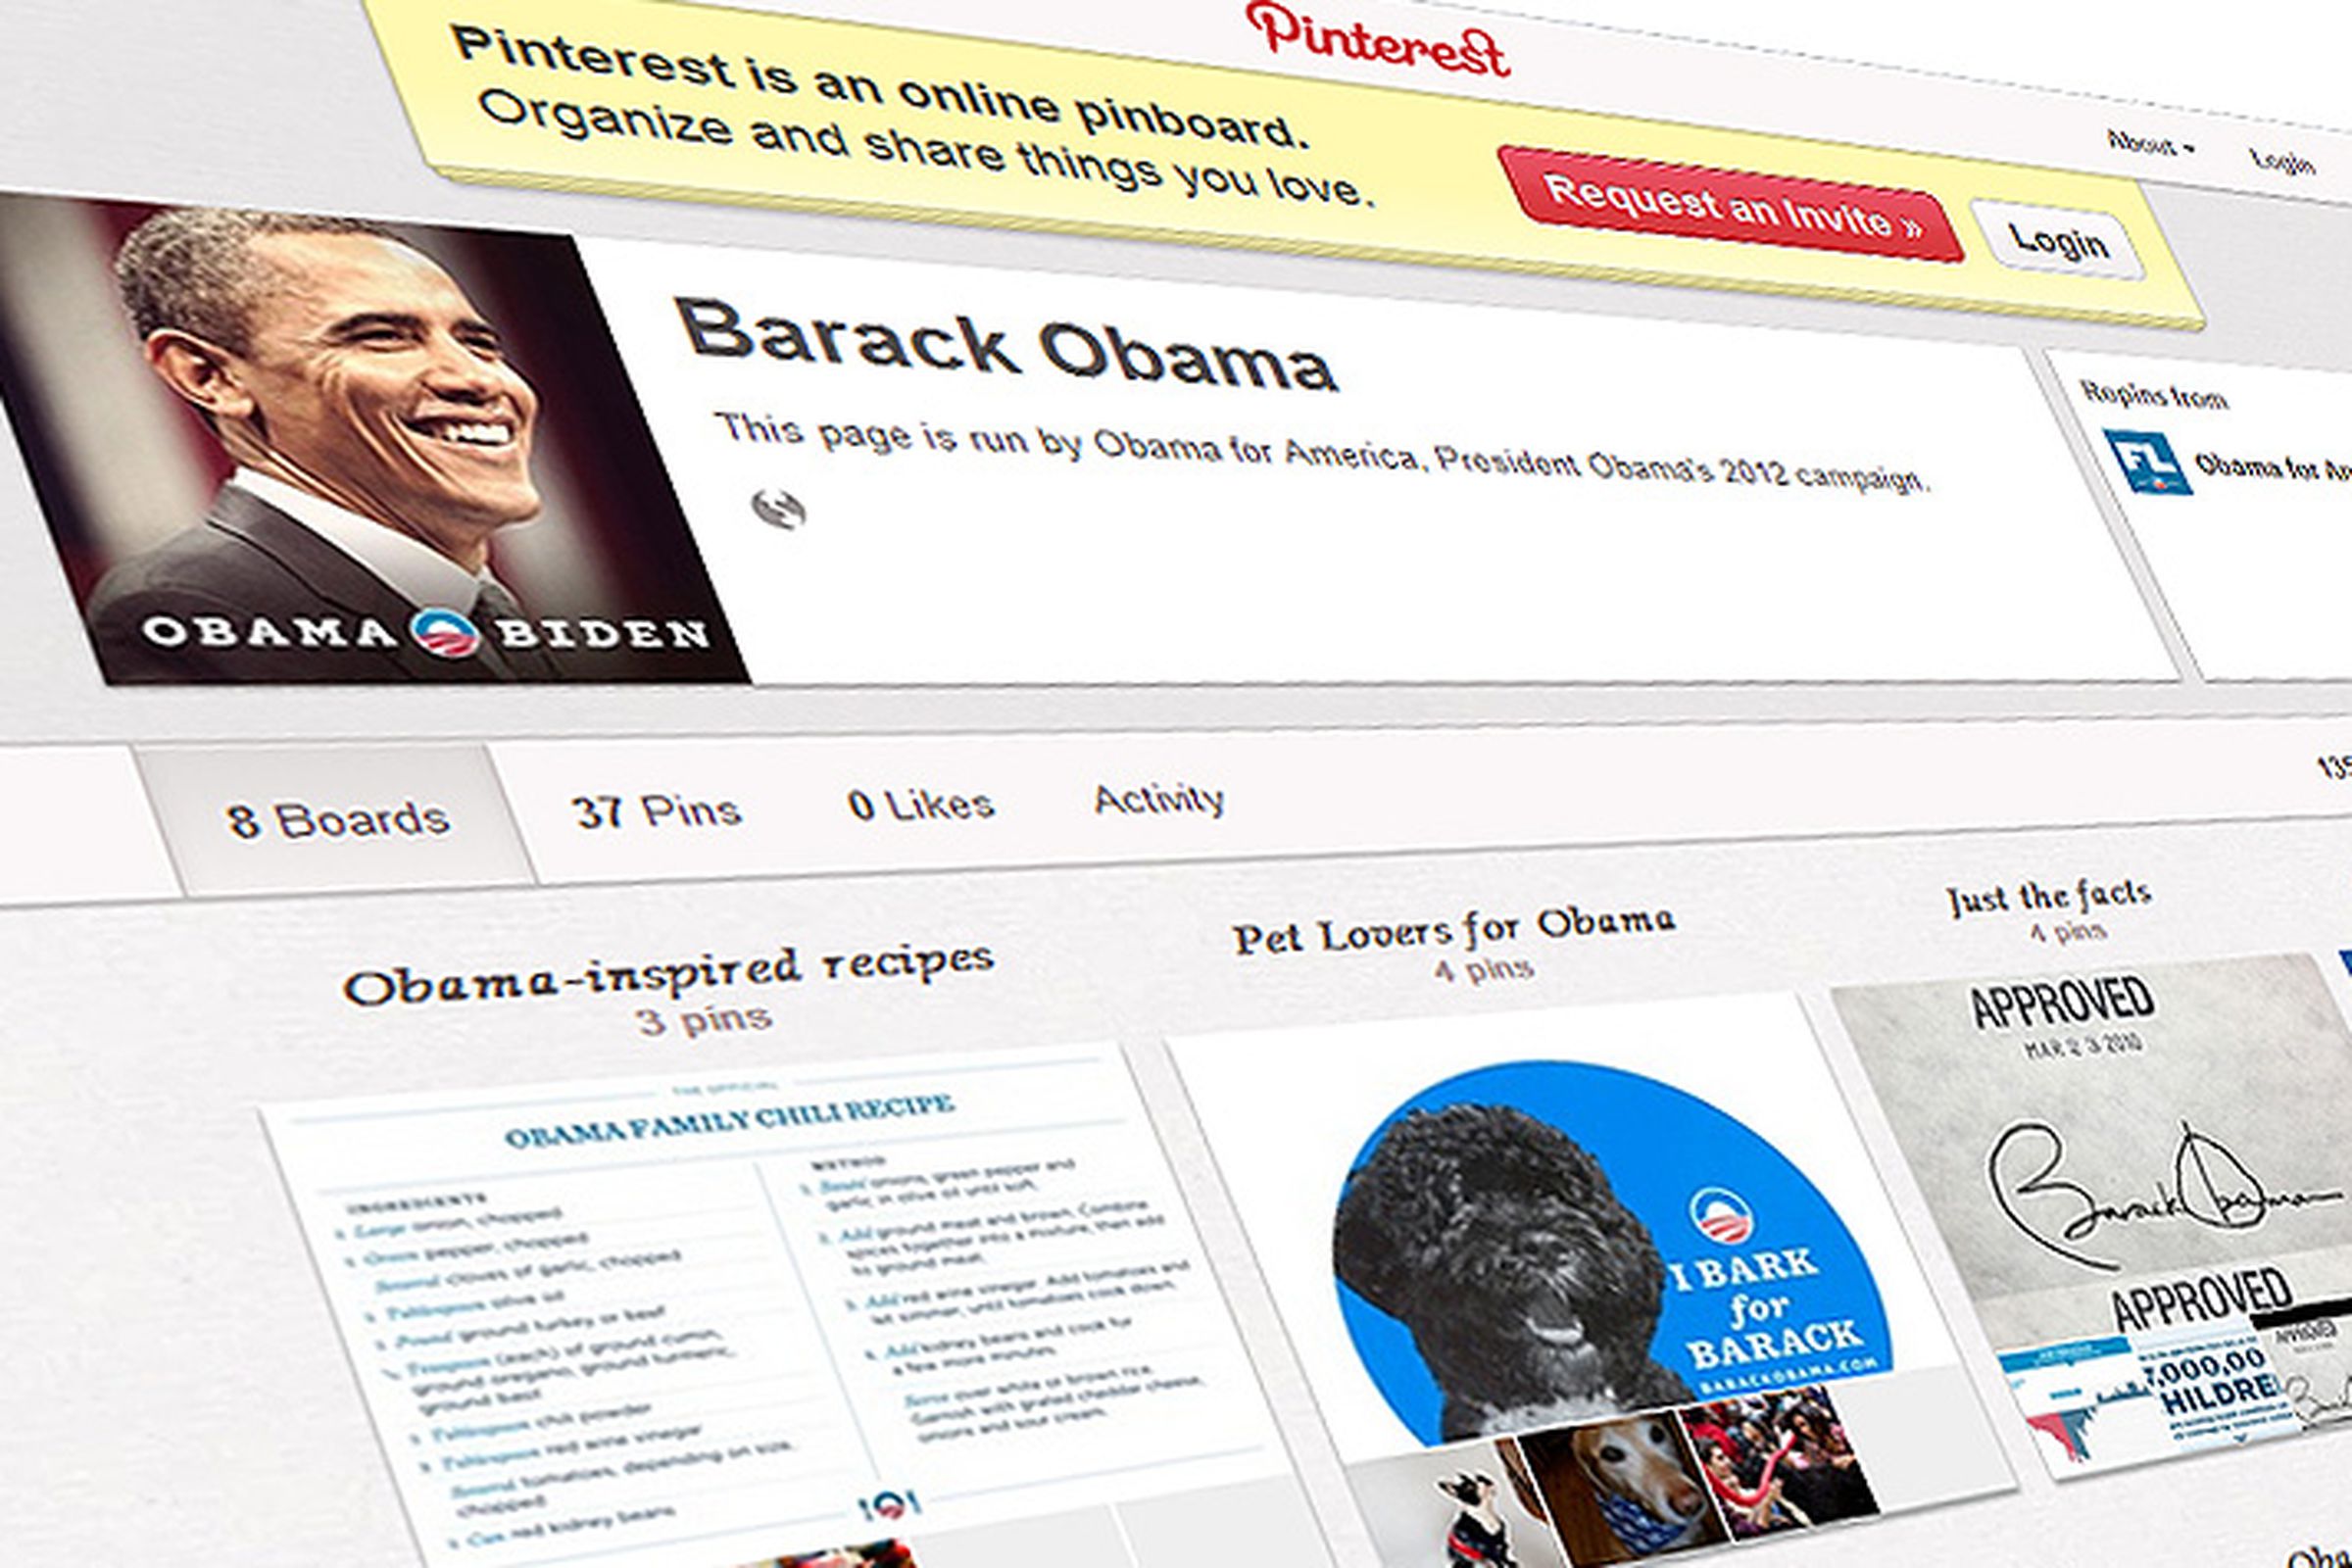 Obama on Pinterest